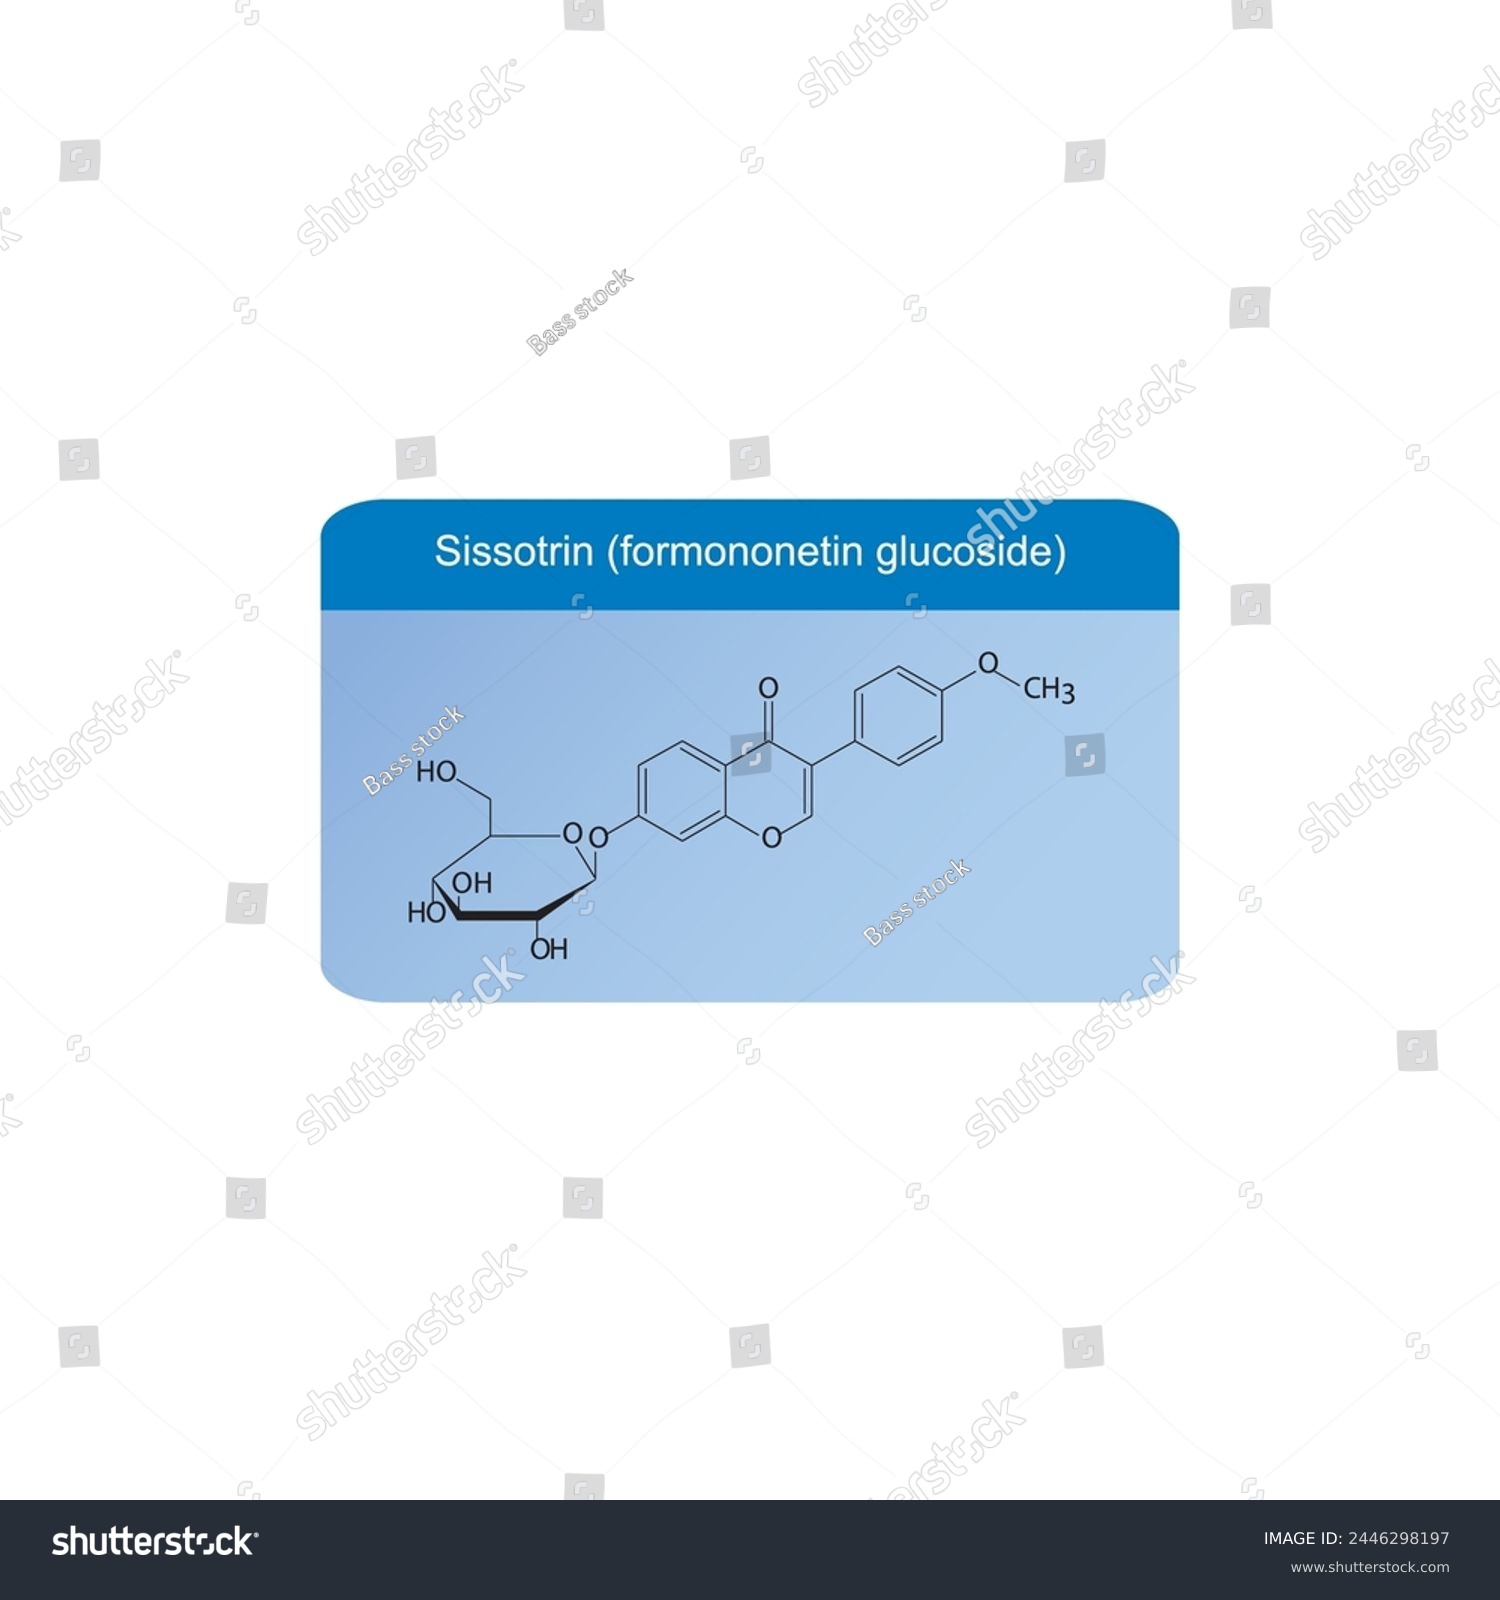 SVG of Sissotrin (formononetin glucoside) skeletal structure diagram.Isoflavanone compound molecule scientific illustration on blue background. svg